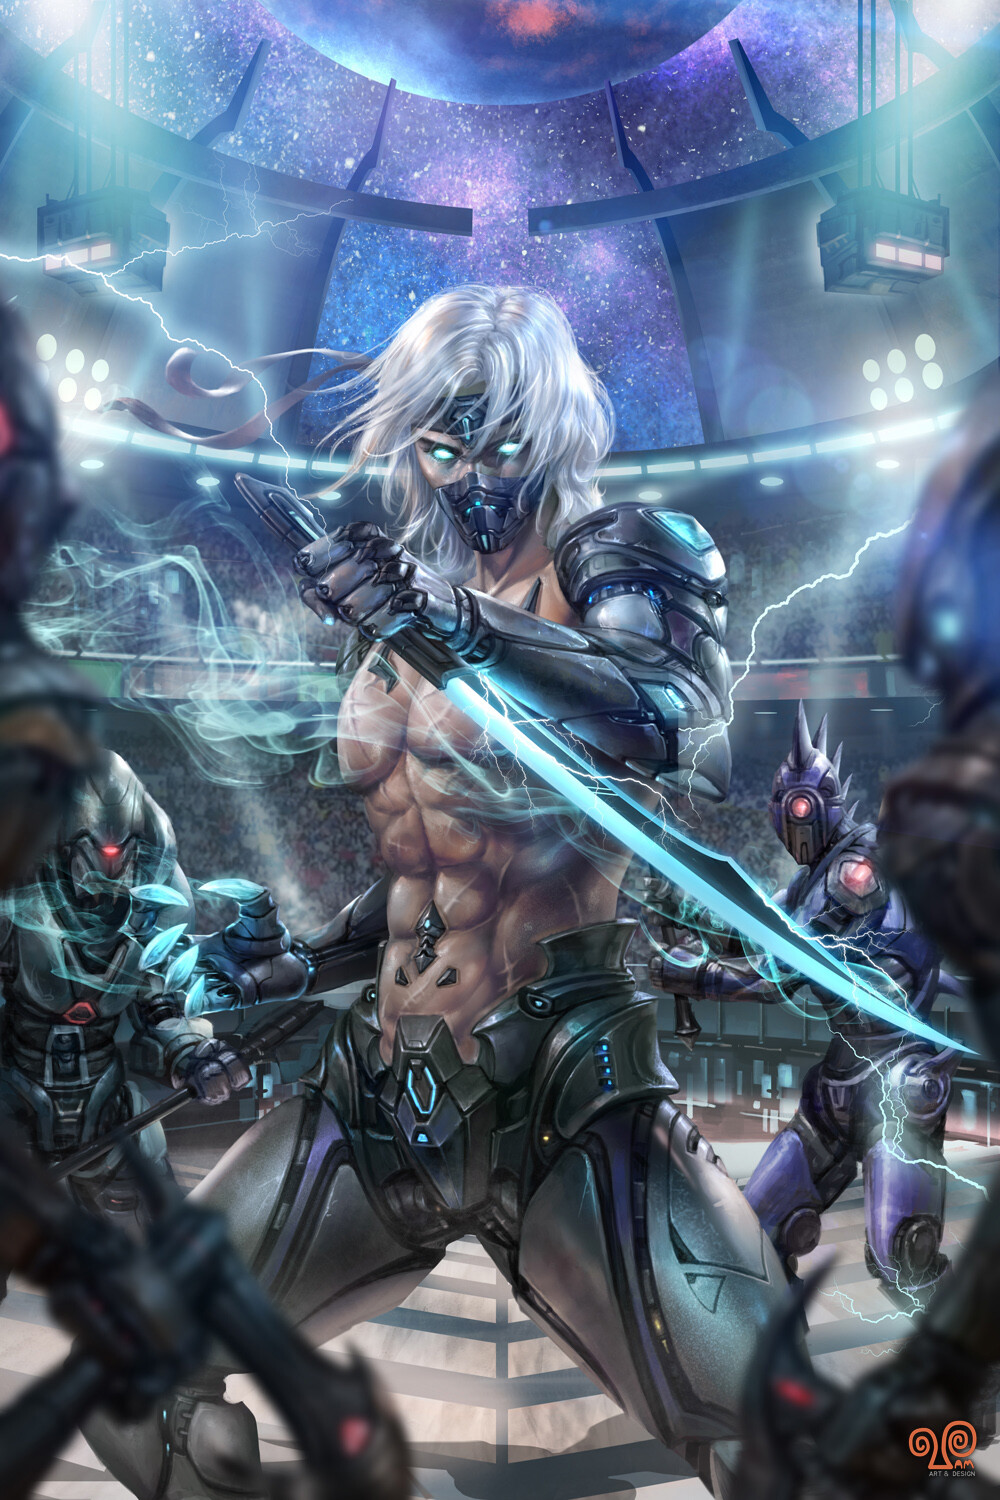 General 1000x1500 Mansik Yang drawing men cyborg prosthesis silver hair short hair blue eyes glowing eyes weapon sword fighting arena mask cyberpunk